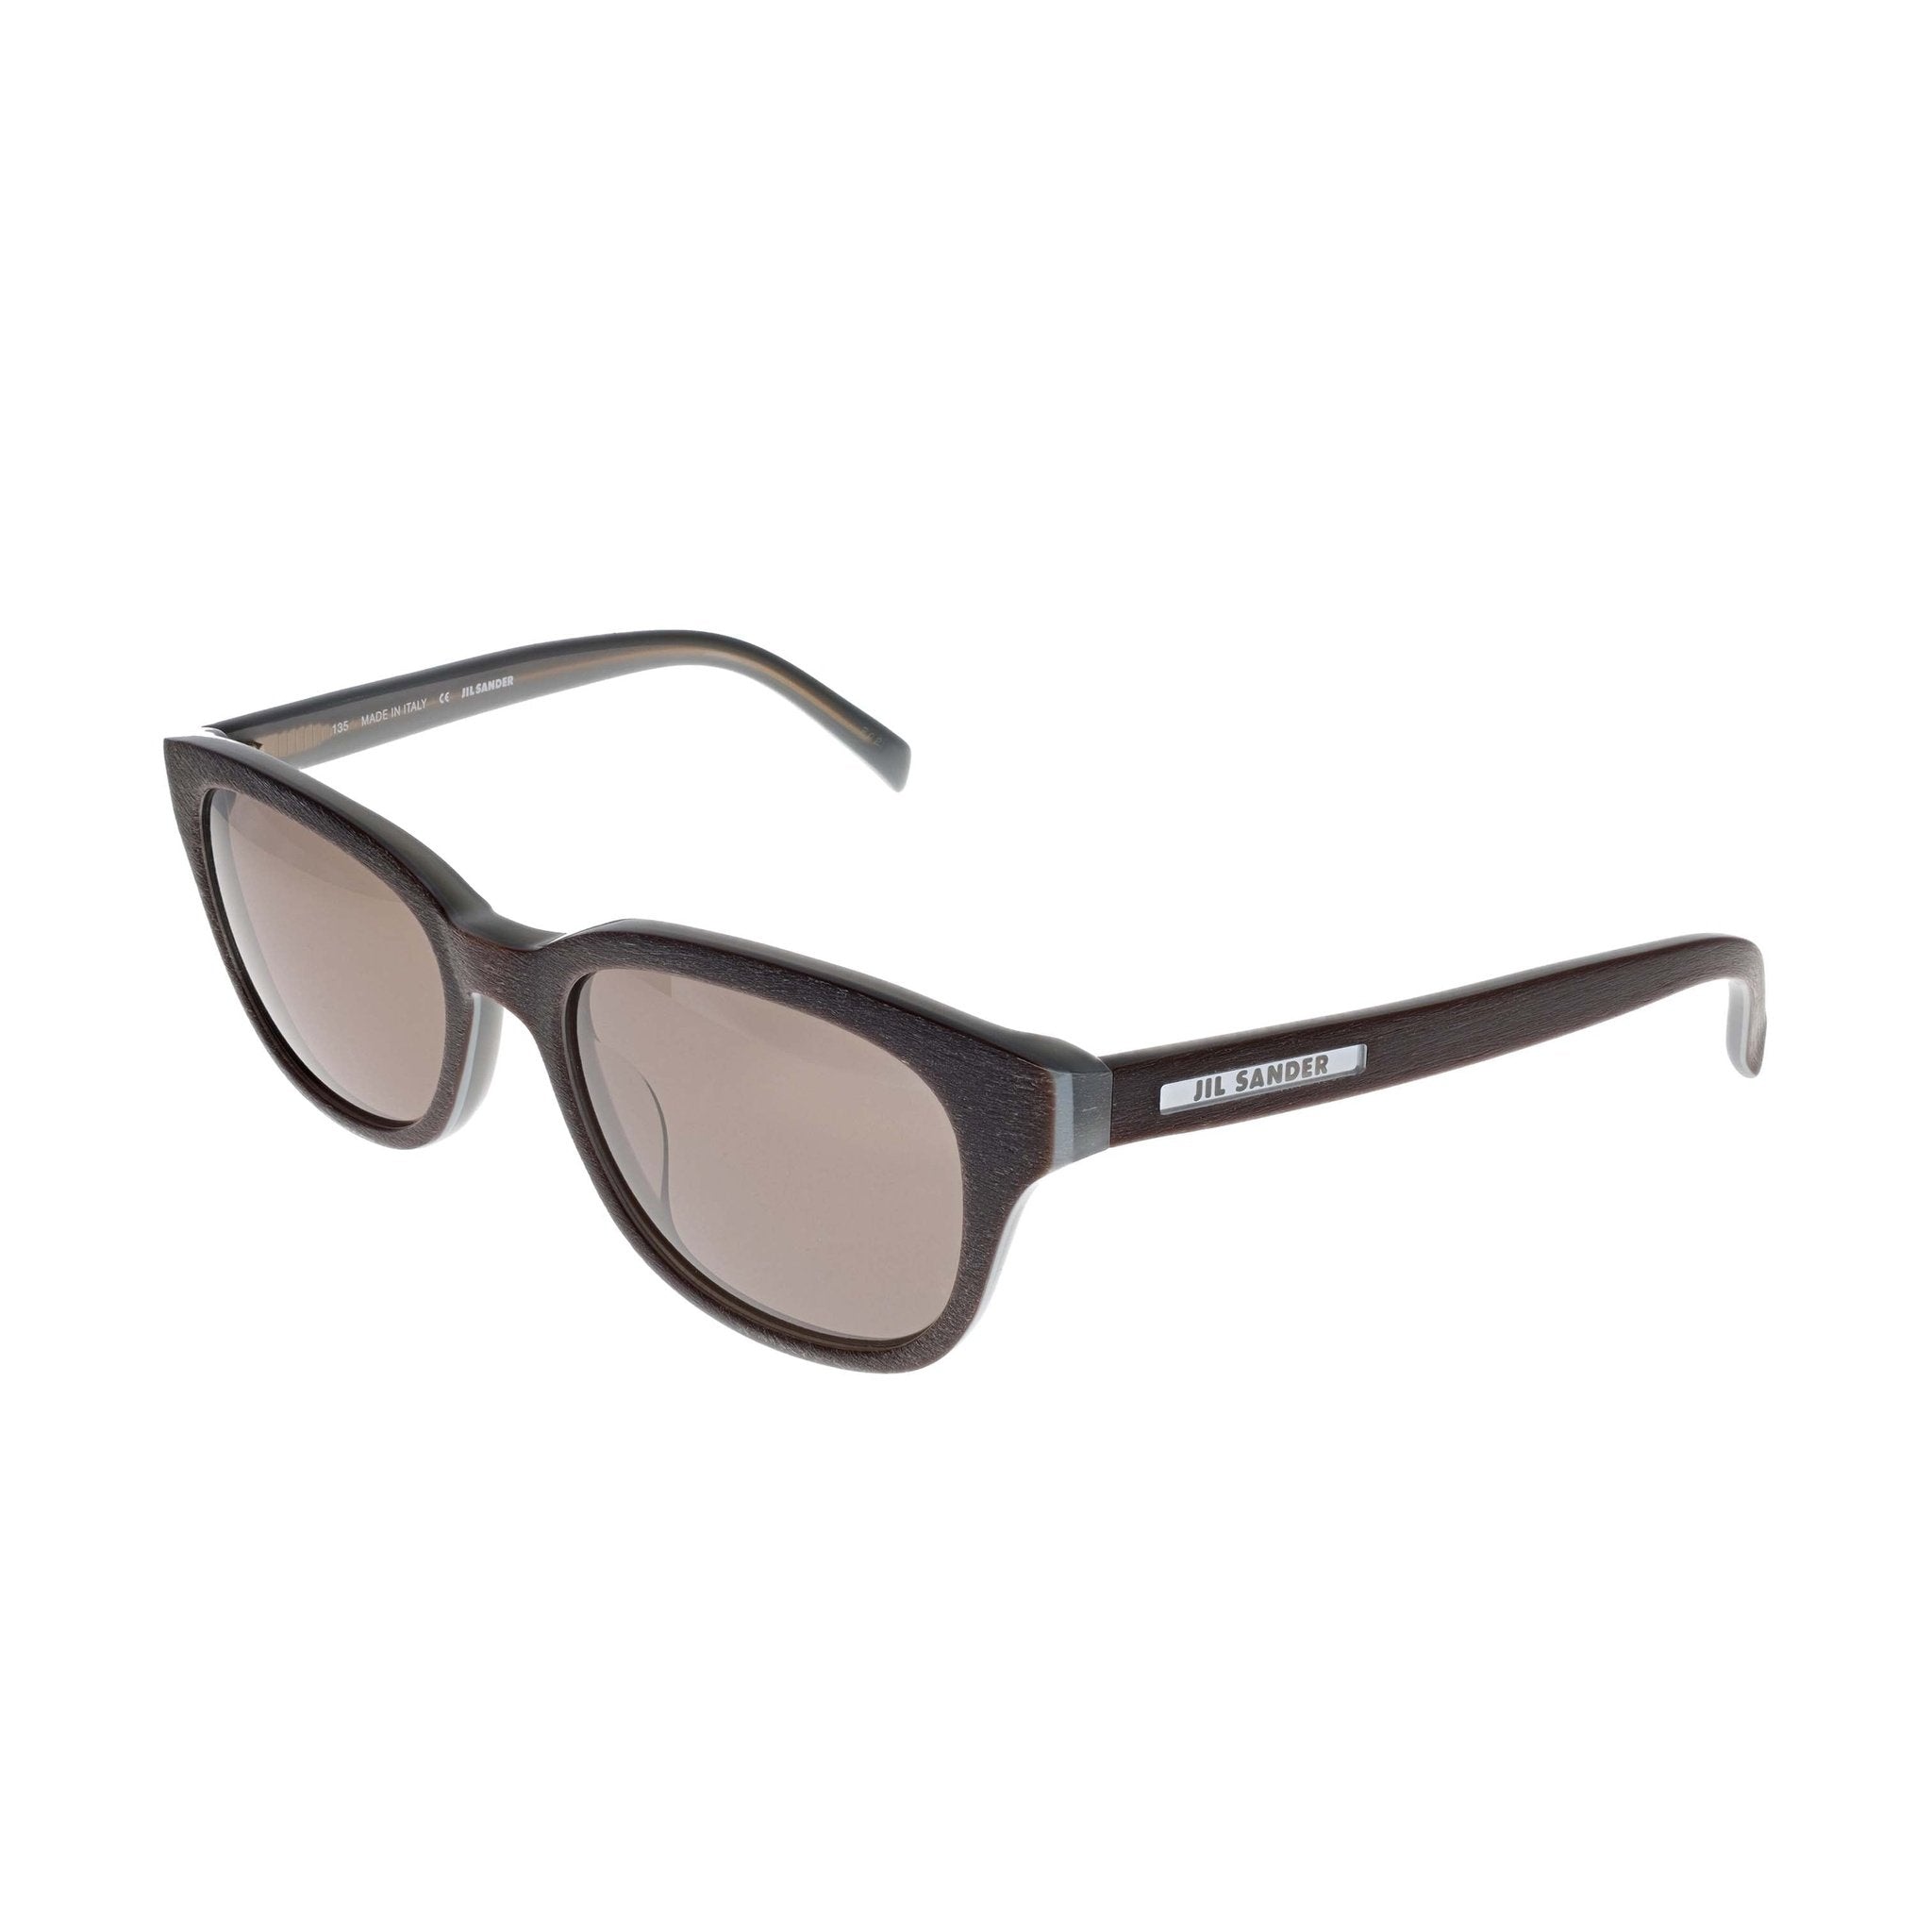 Jil Sander Sunglasses - JS687S - Brown / Gray